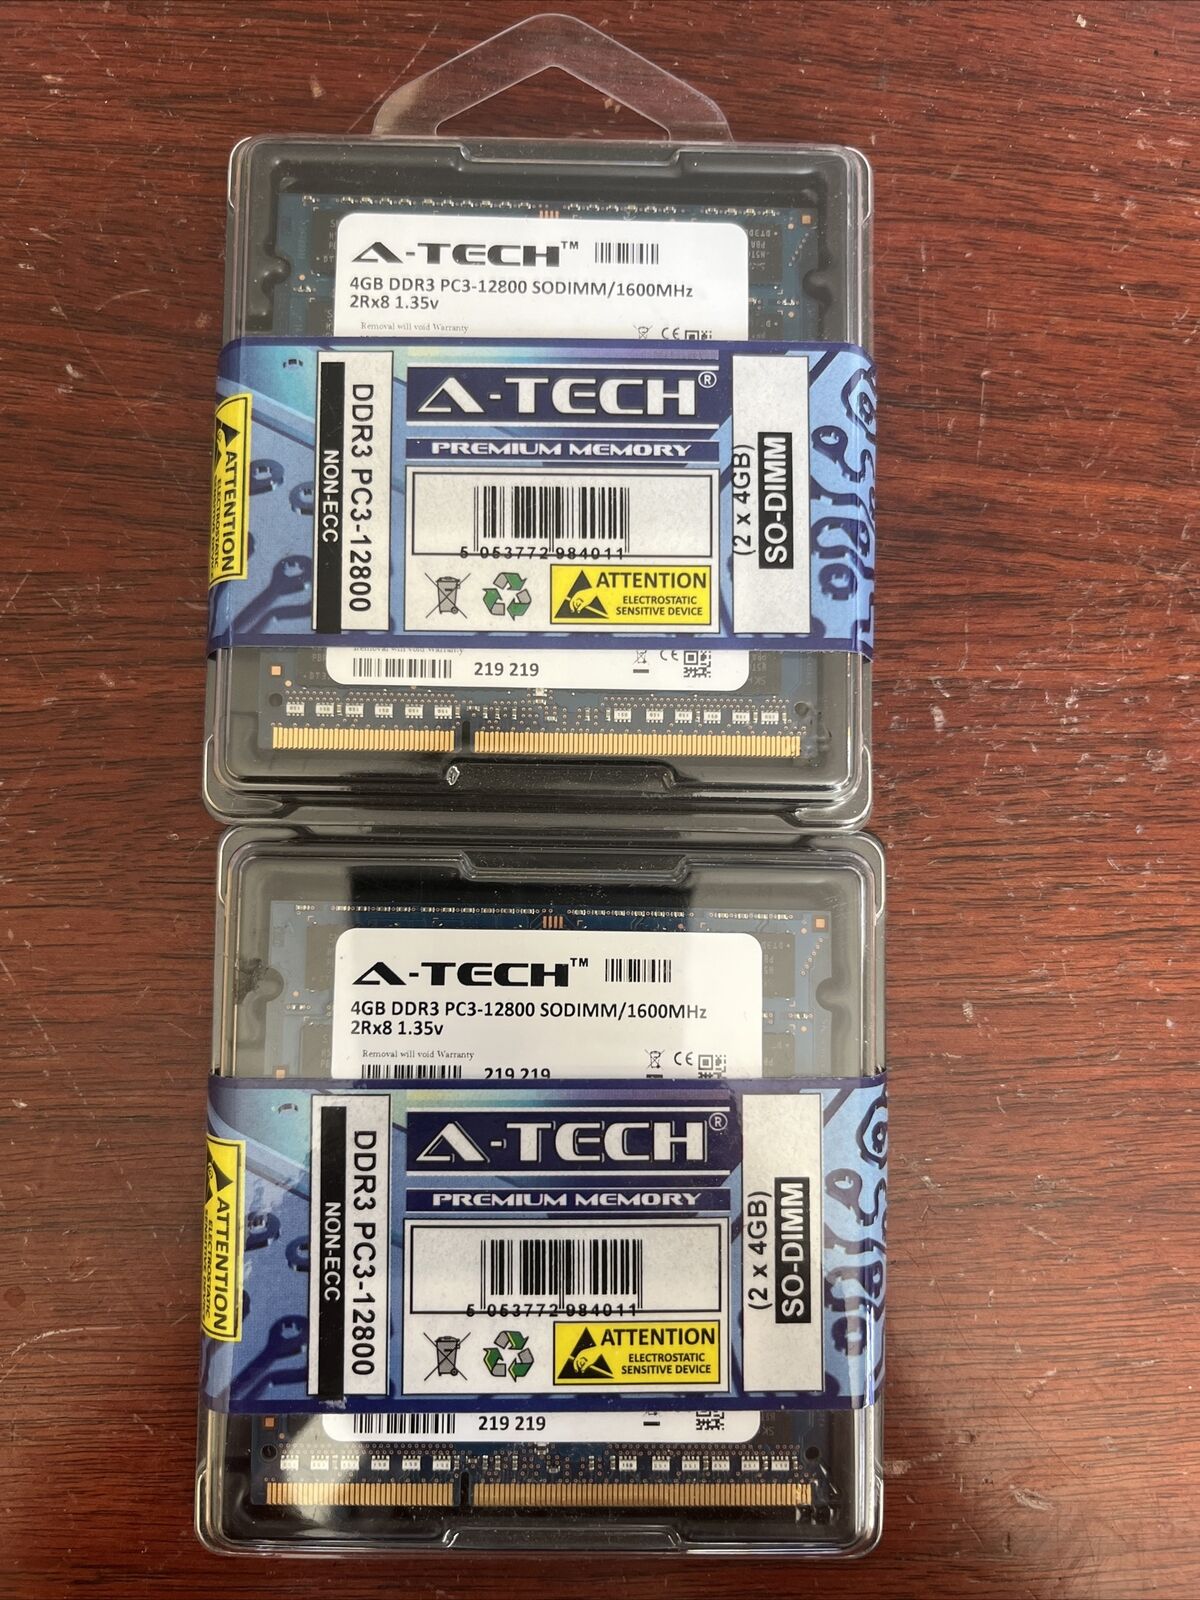 2 A-Tech 8GB Kits (4x4GB Total) PC3-12800S SO-DIMM Memory RAM